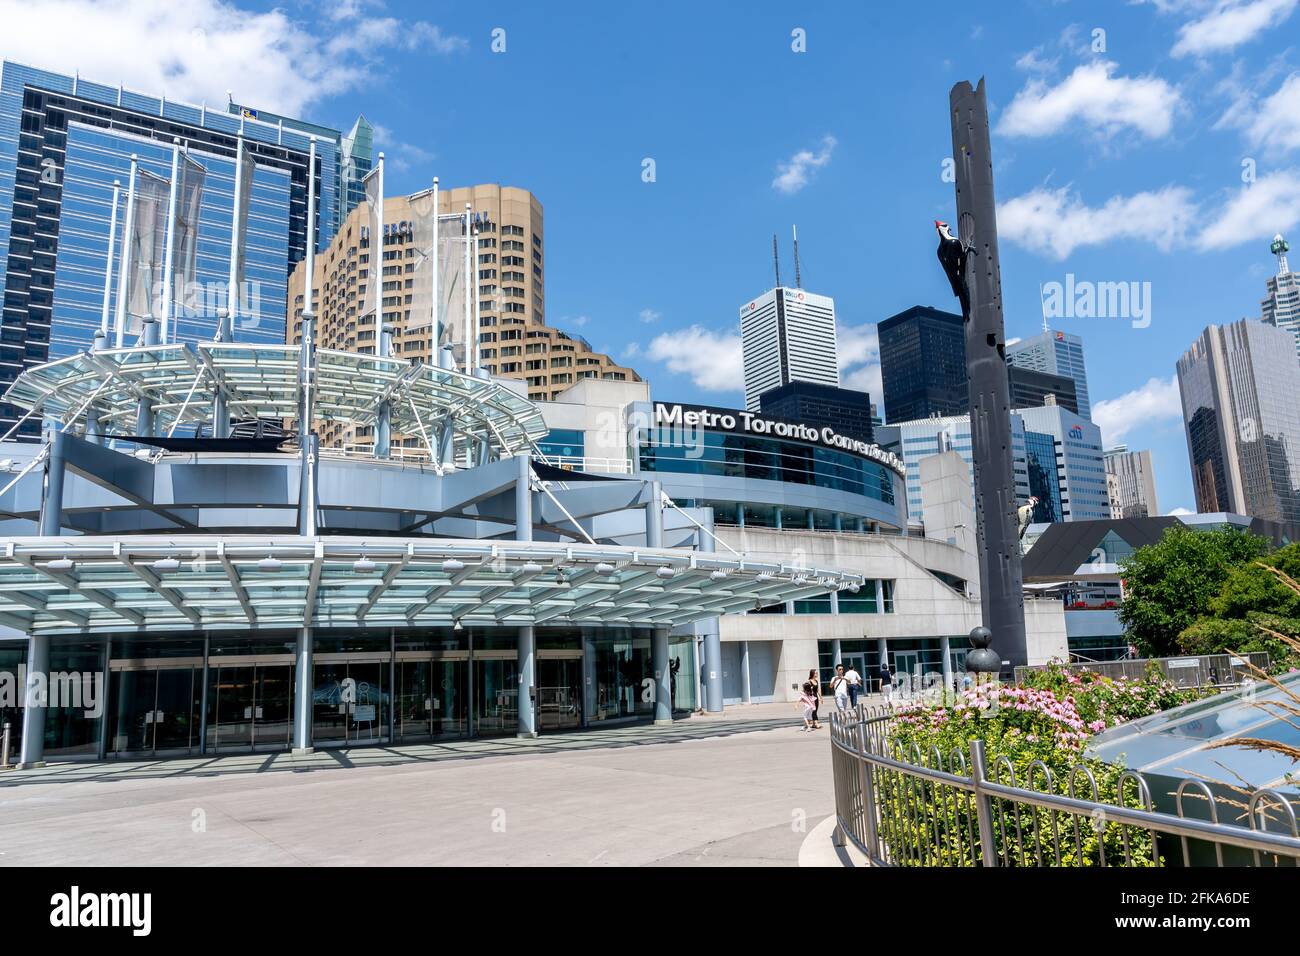 Toronto, Canada - July 31, 2019: Metro Toronto Convention Centre in Toronto, Canada. Stock Photo